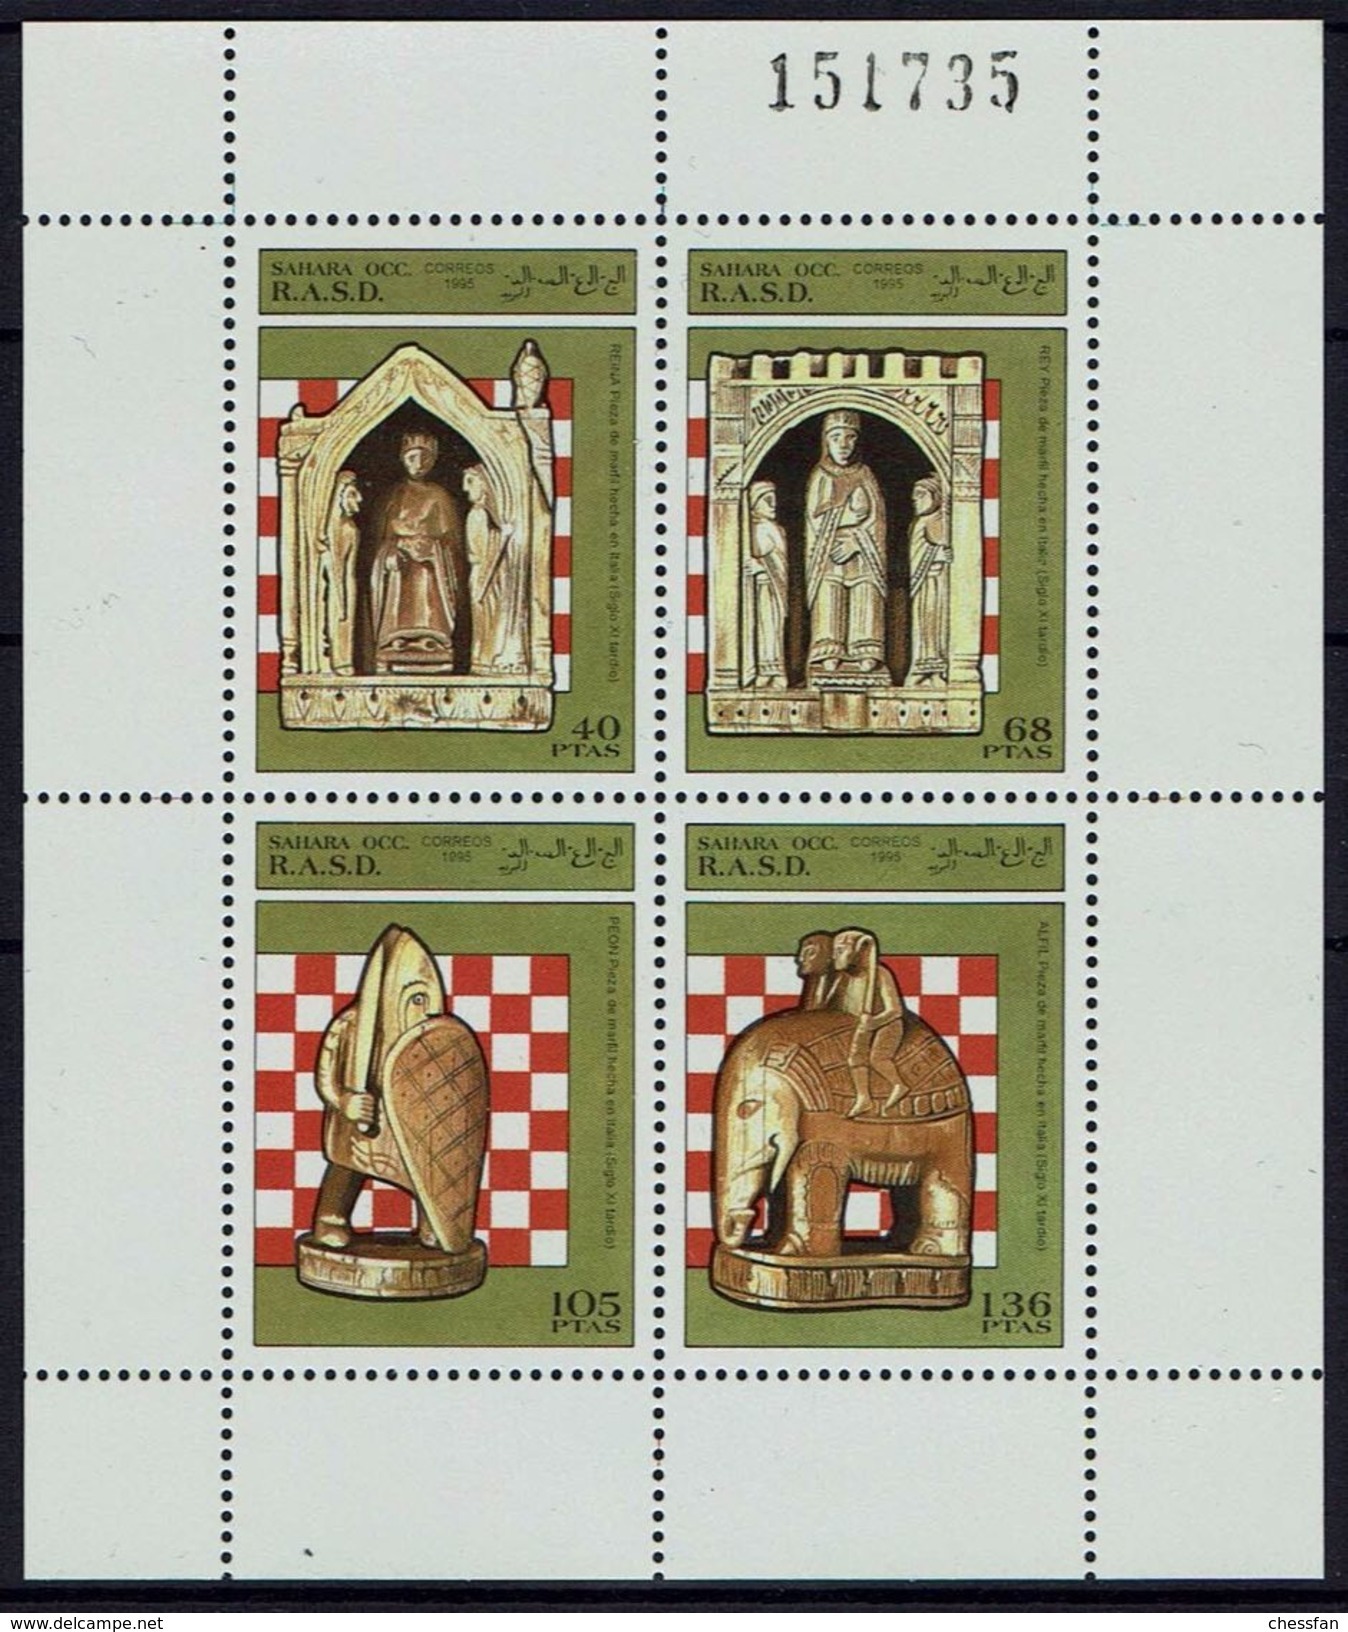 Schaken Schach Chess Ajedrez - Sahara RASD 1995 - Scacchi